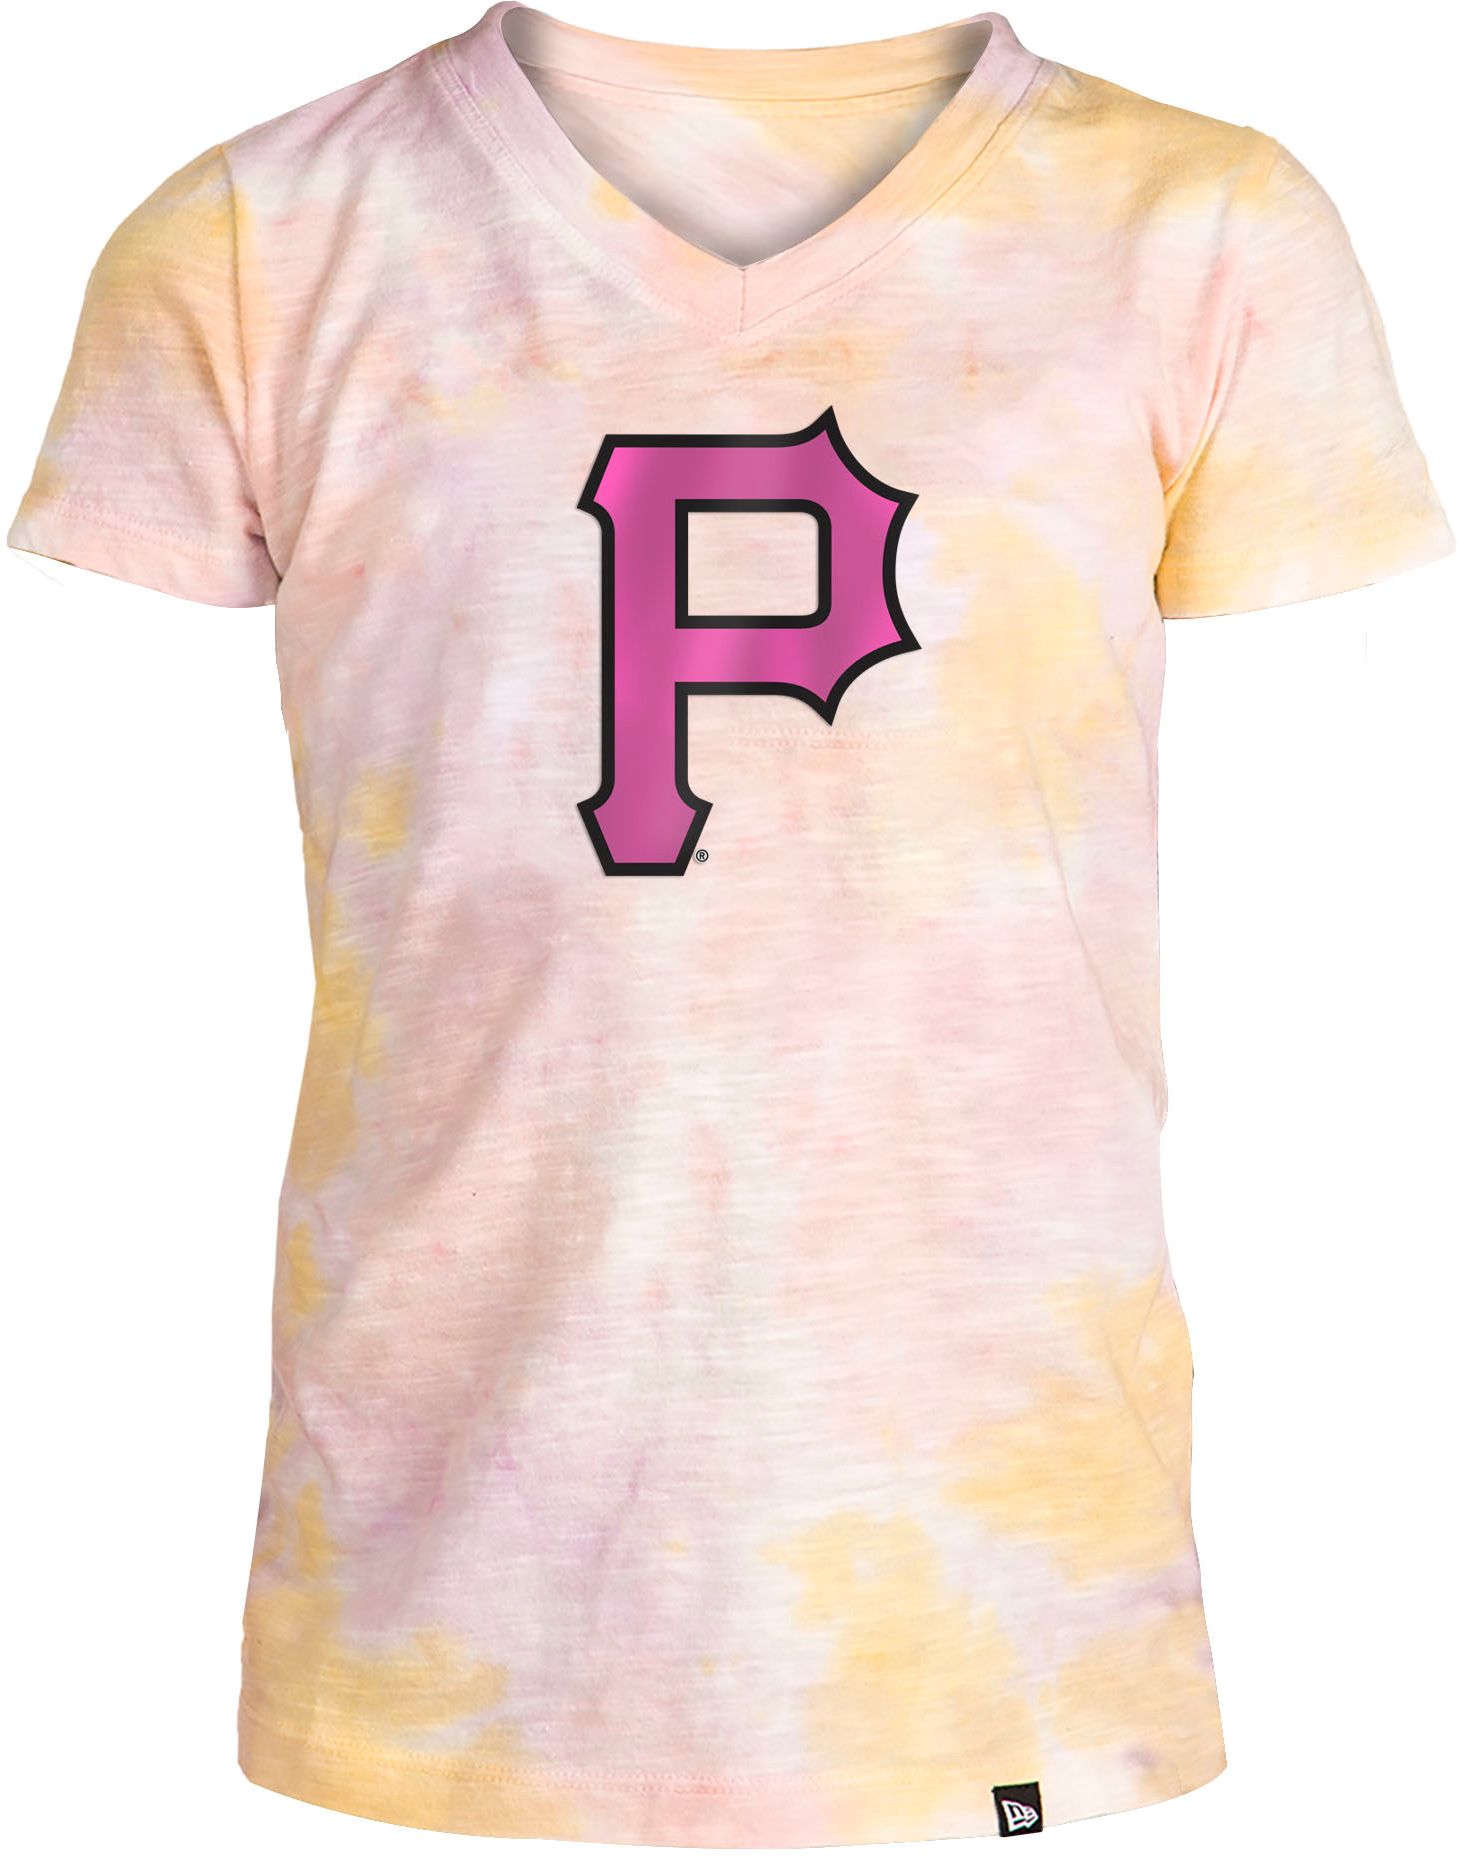 Girl's Youth New Era Pink Detroit Tigers Jersey Stars V-Neck T-Shirt